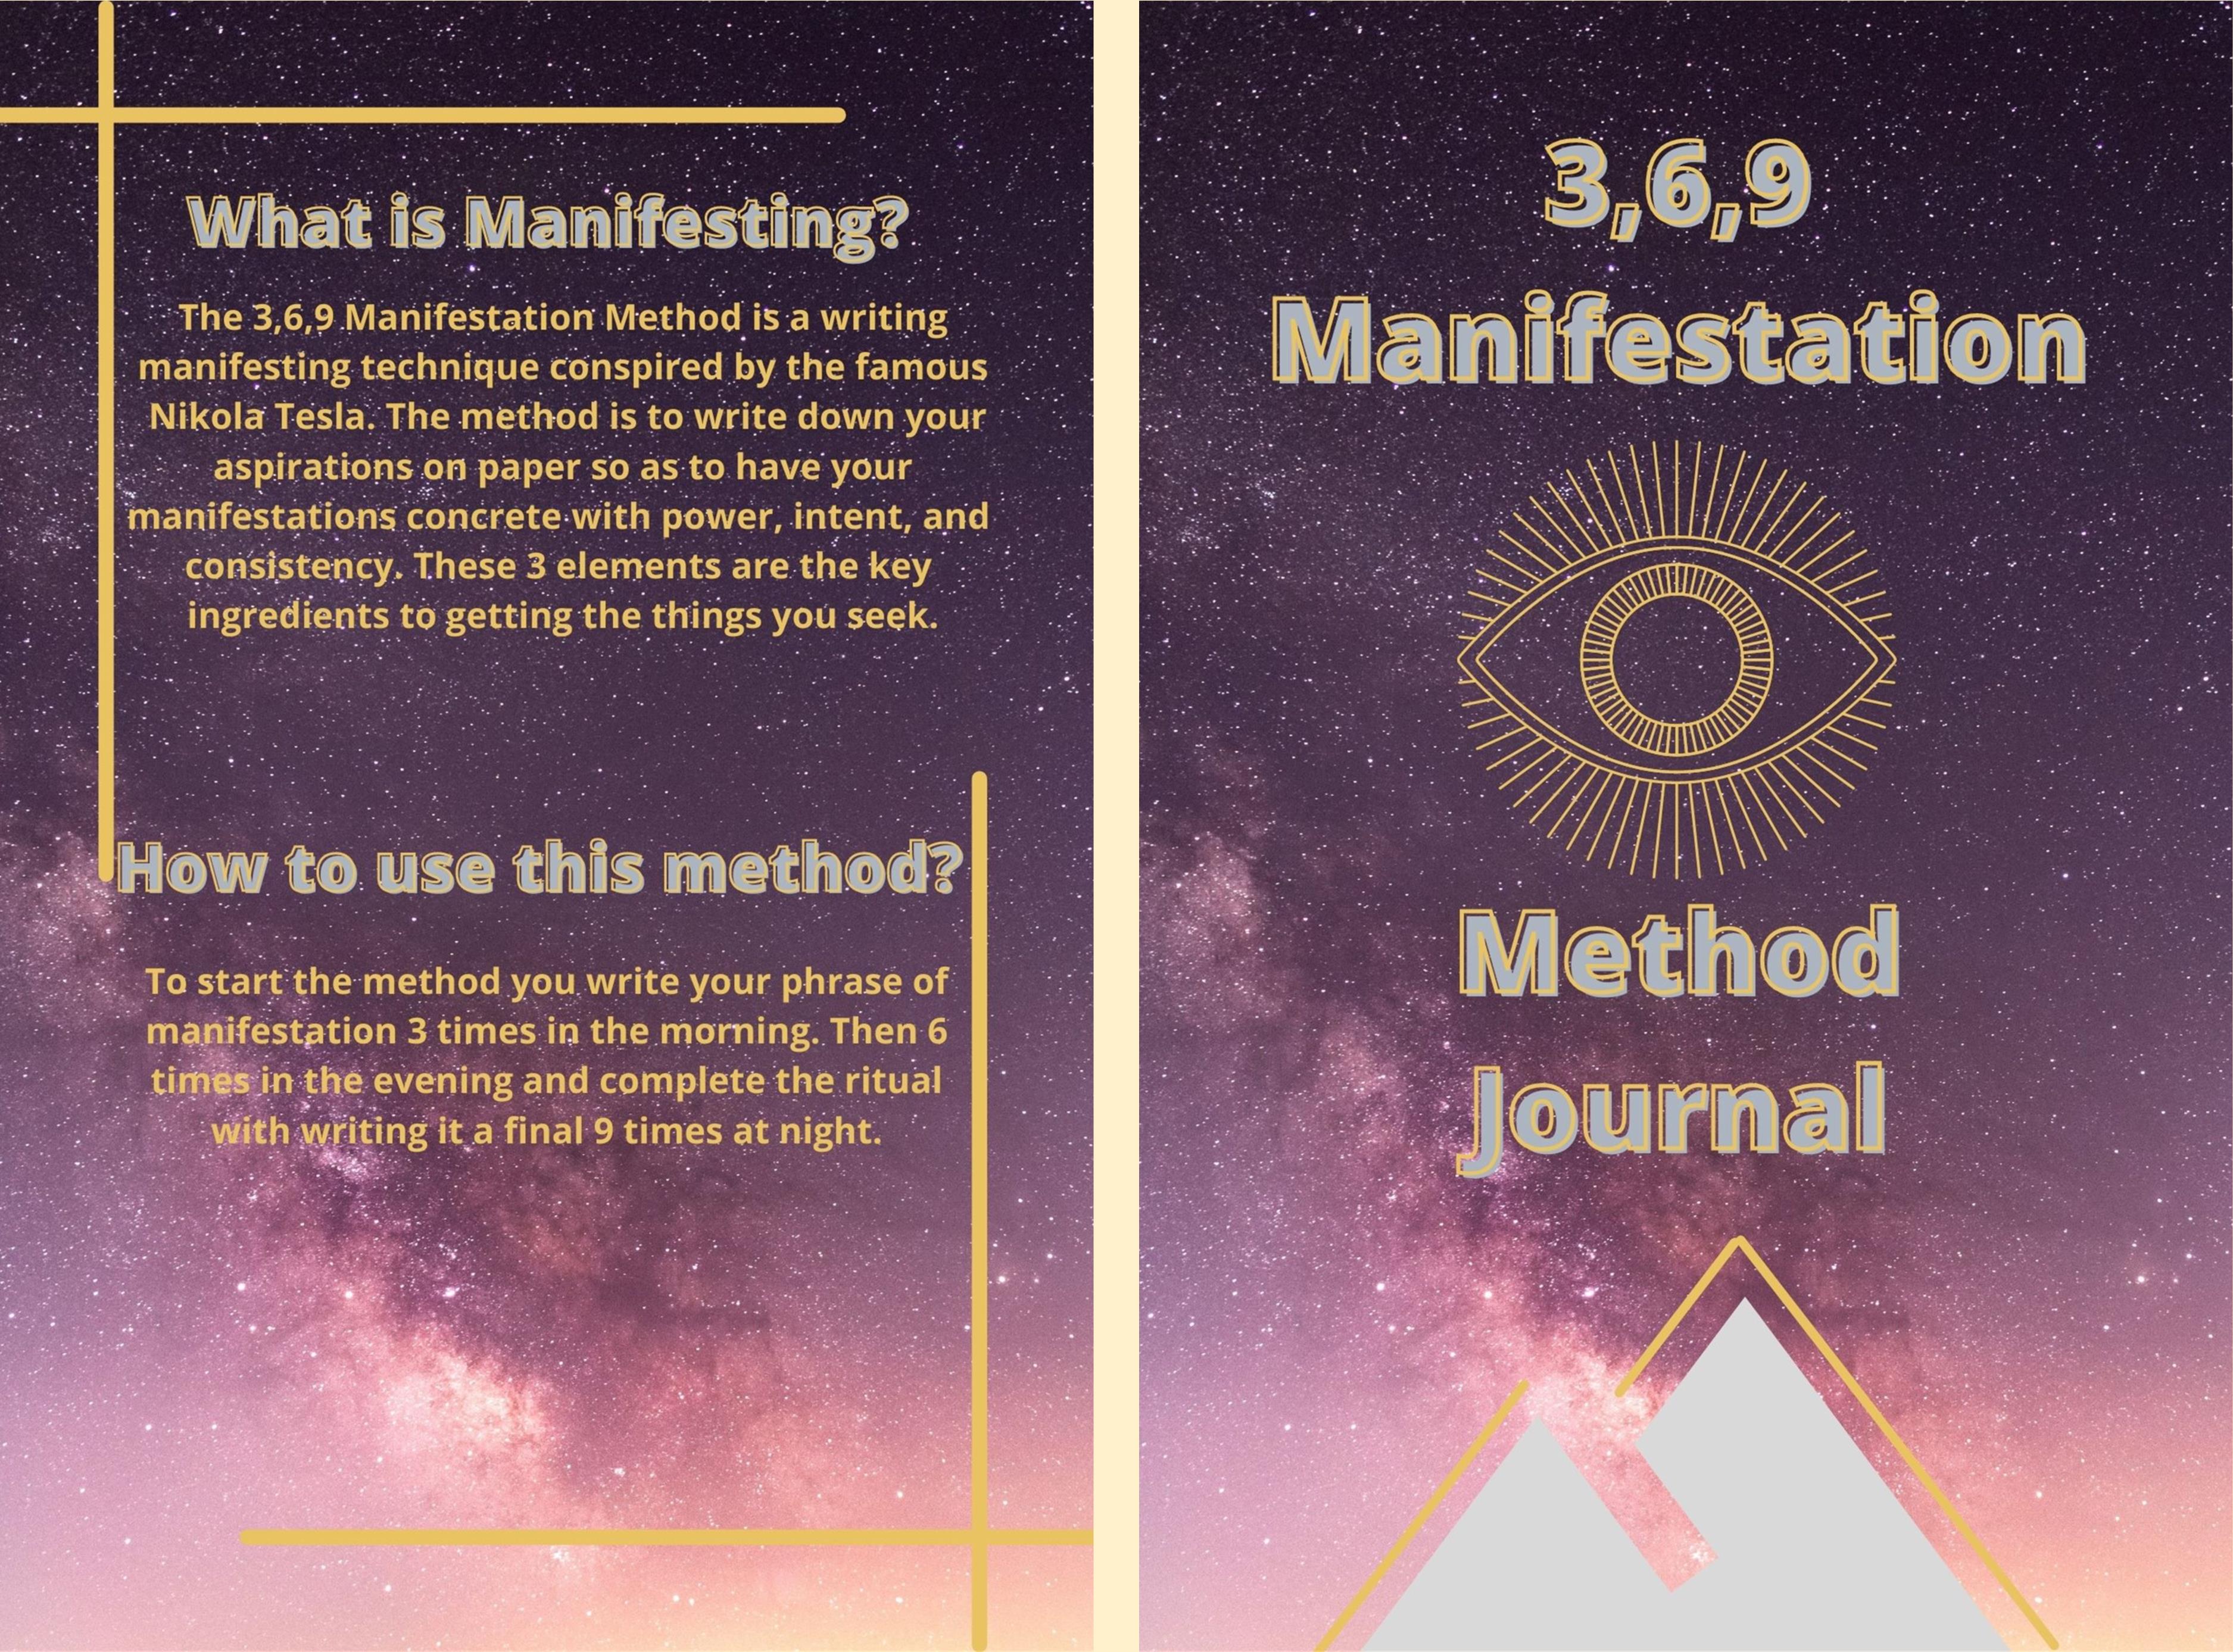 Manifestation Journal cover image